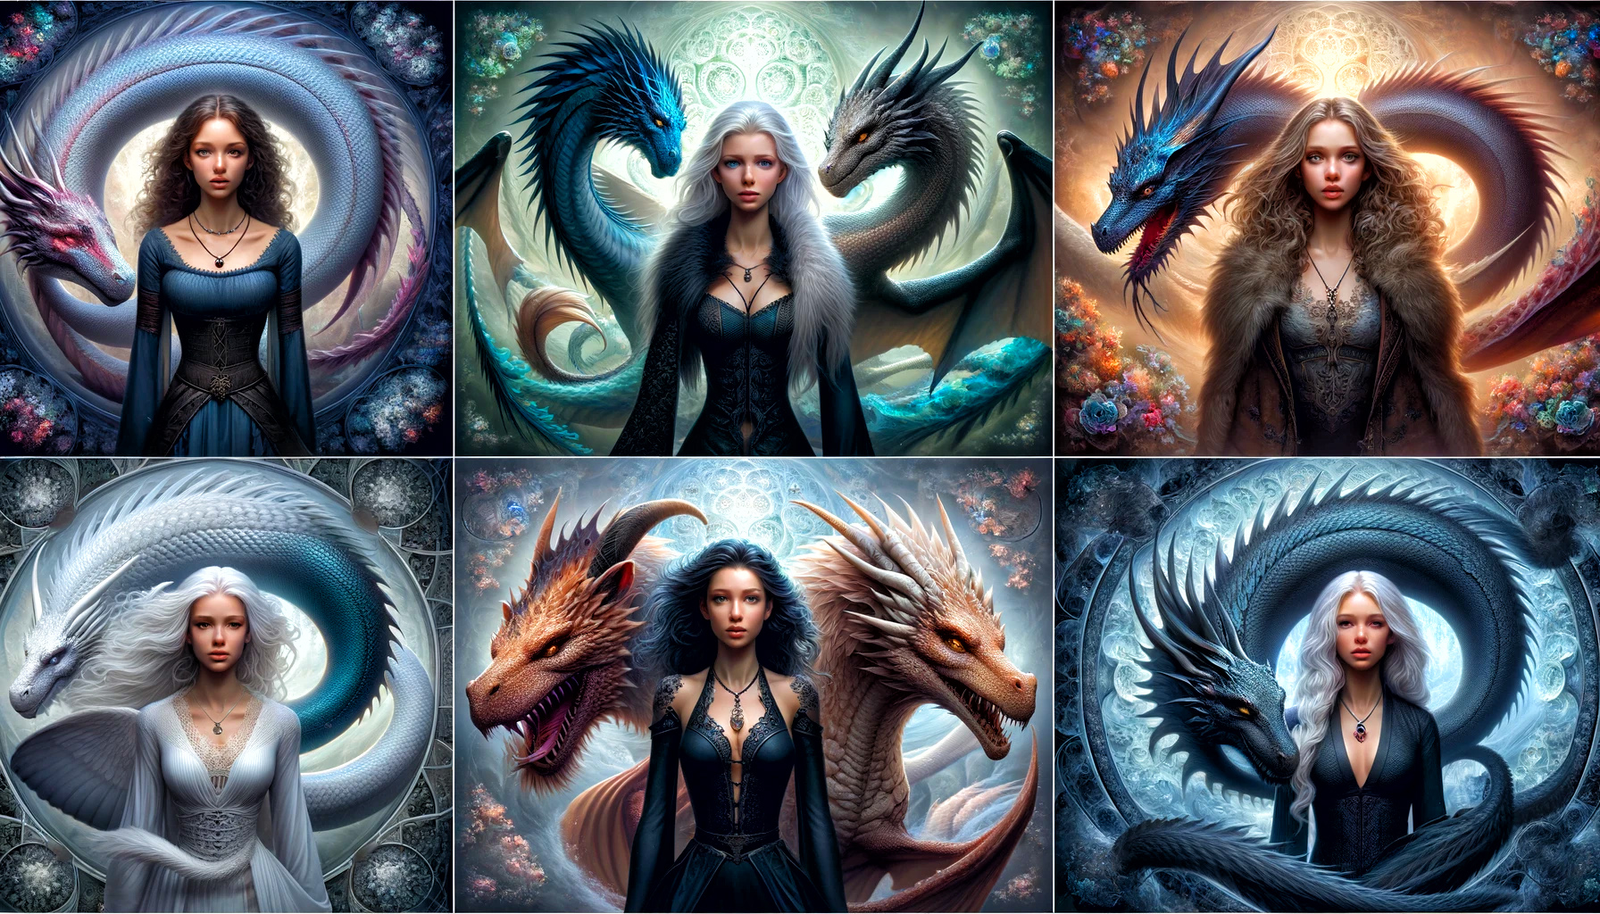 Dragon Queens